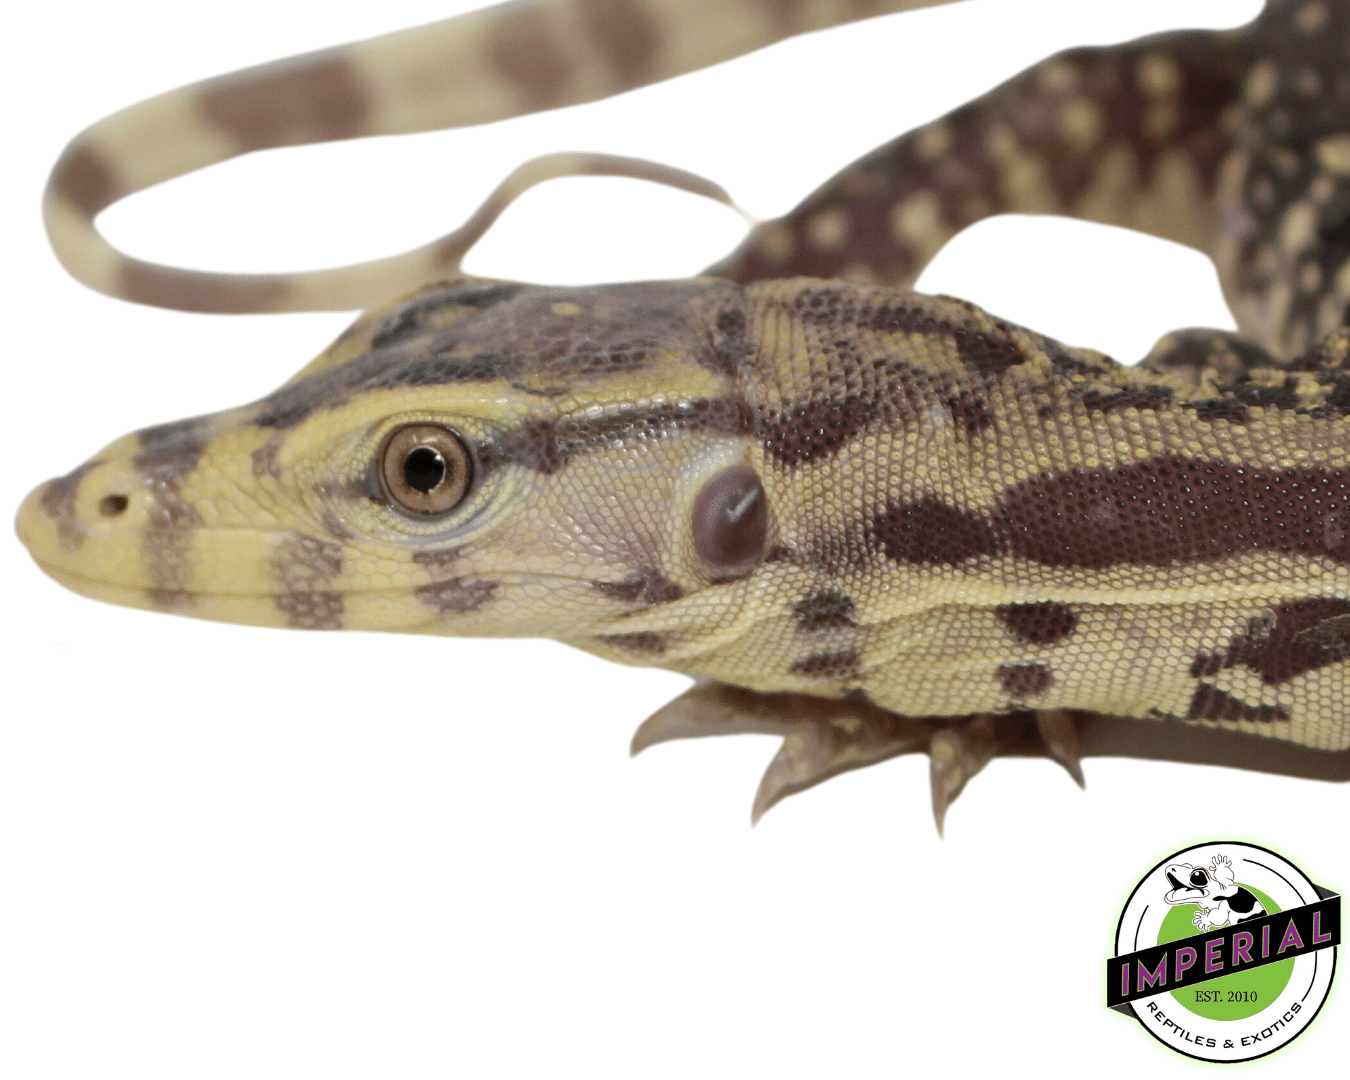 t+ albino water monitor lizard for sale, buy reptiles online